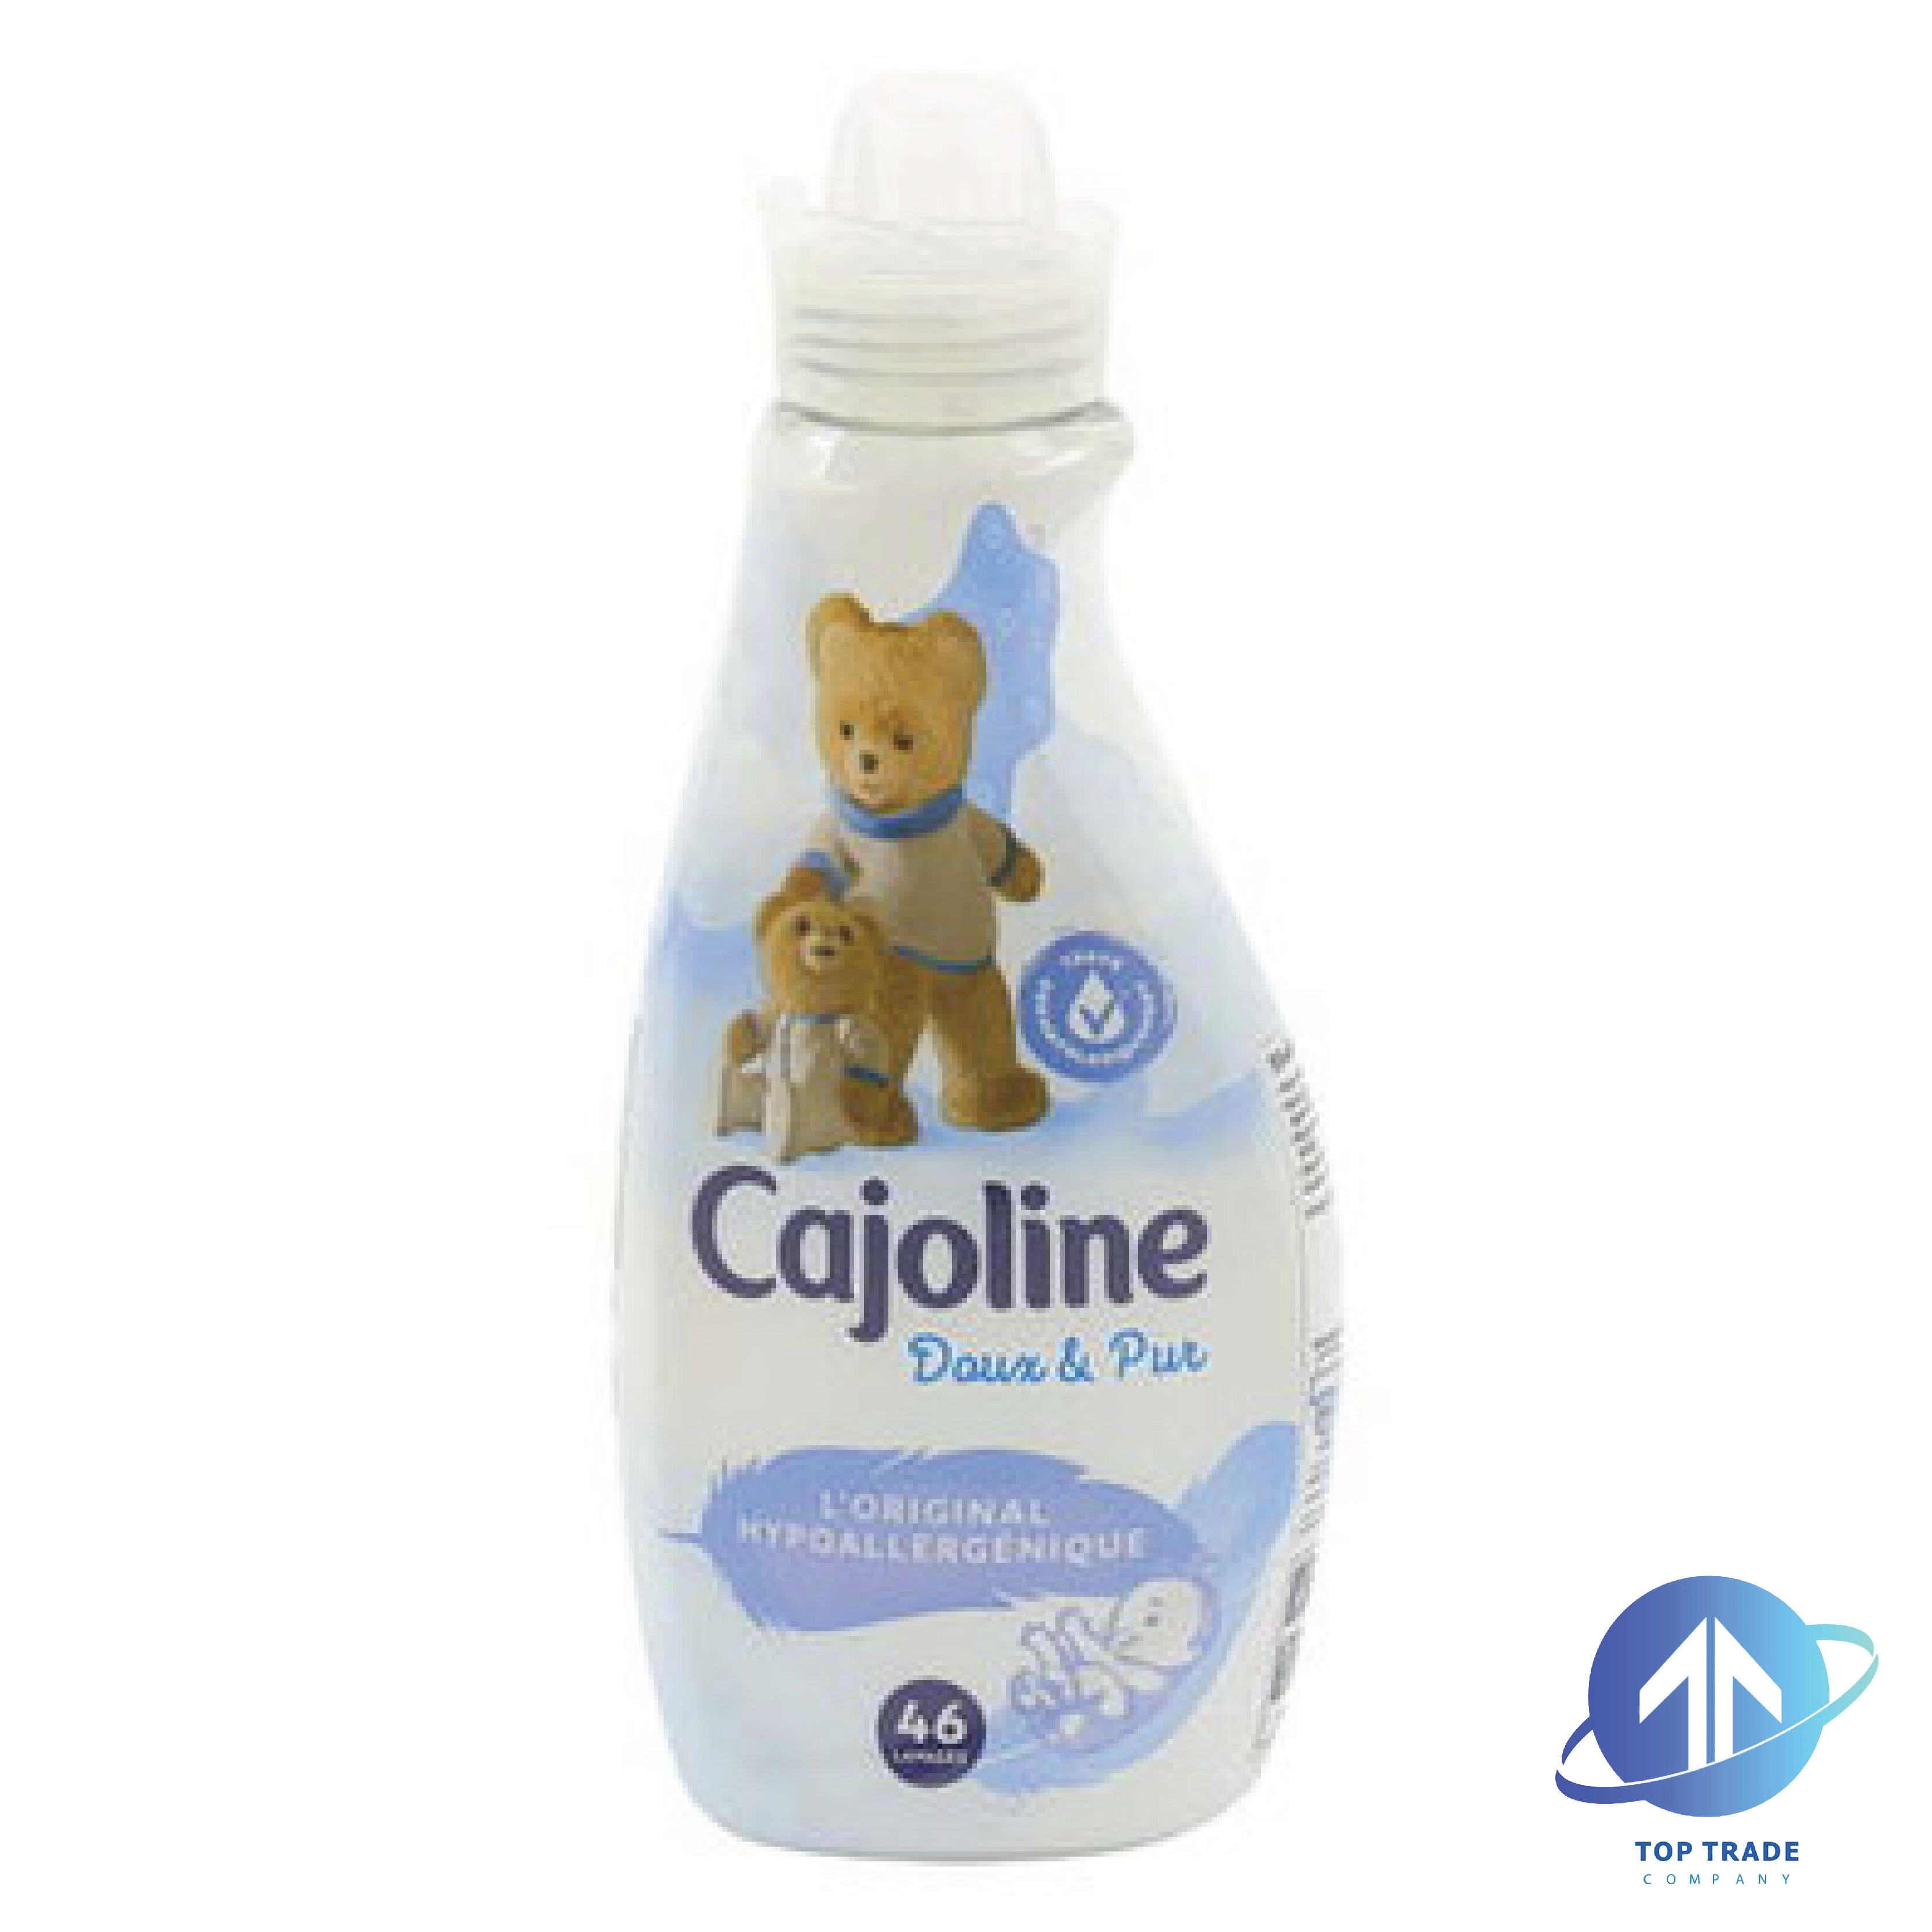 Cajoline softner pure & gentle 1,16L/46sc